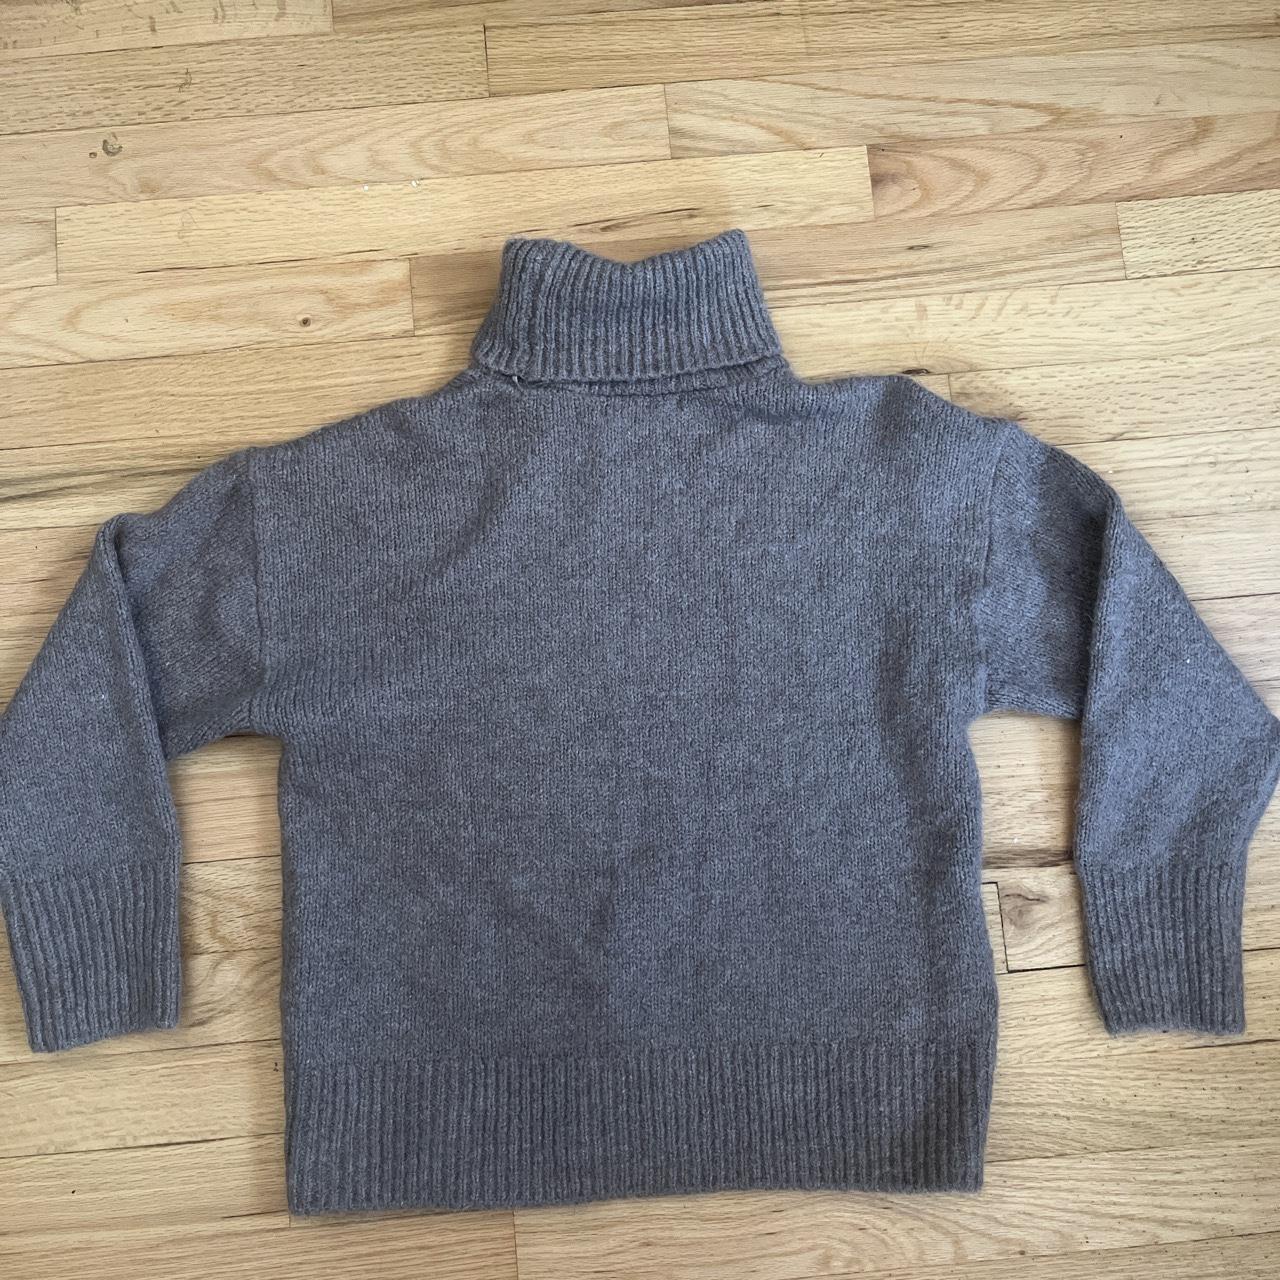 Light brown wool sweater 🍂 Turtleneck Small/ medium - Depop